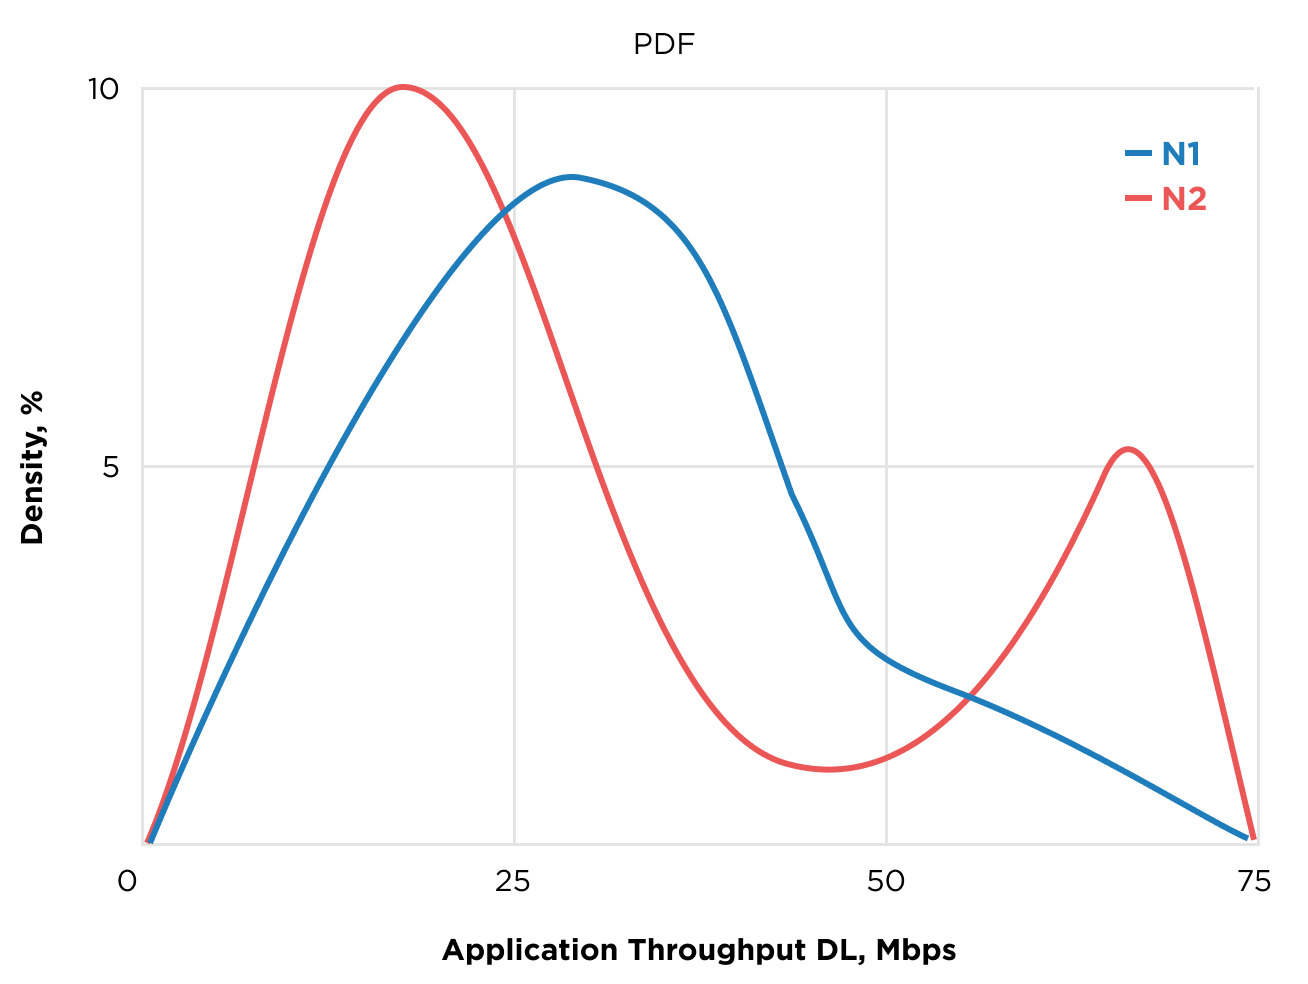 Функция плотности вероятности (PDF) значений показателя FDTT-QoS Download Mean Data Rate, Mbps